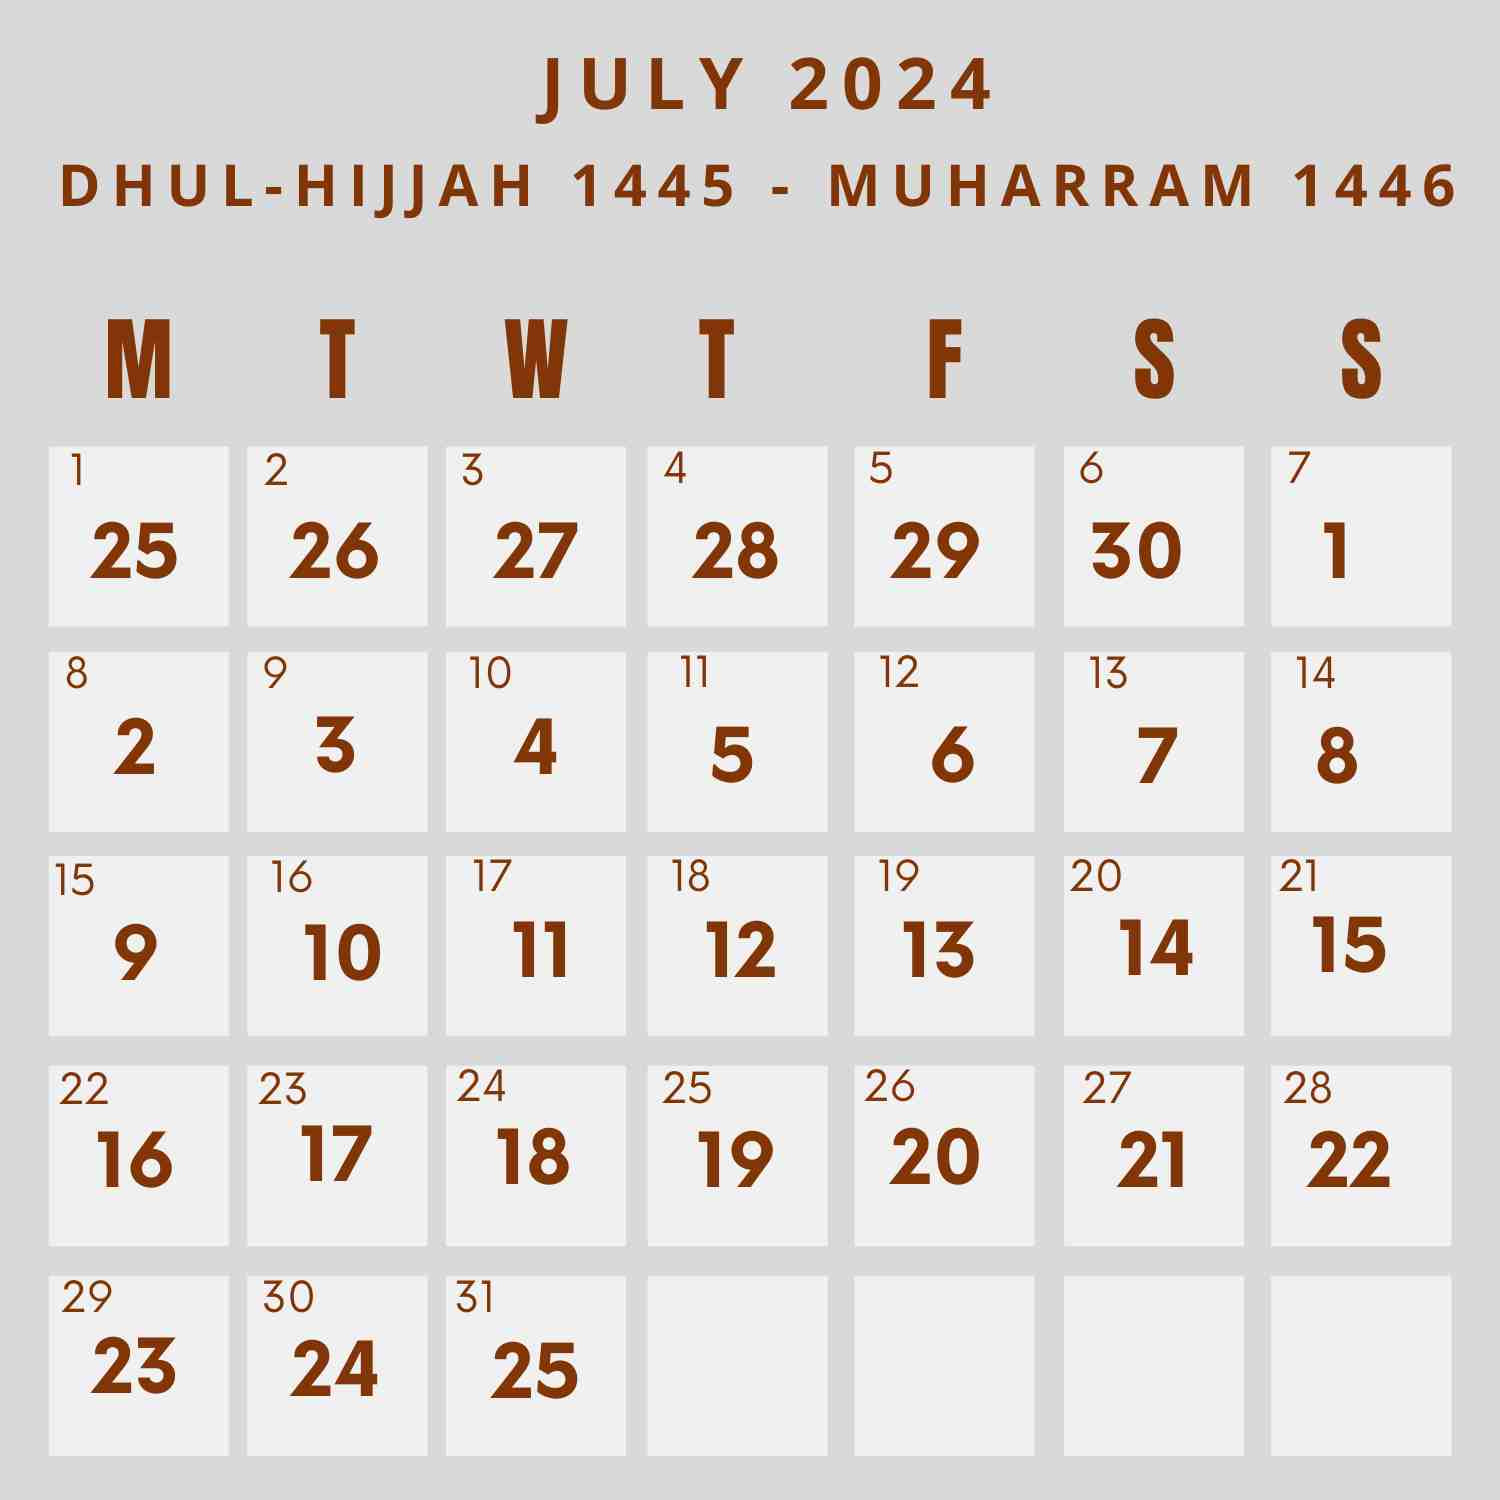 Islamic Calendar 2024 - Khwajadarbar with regard to 27 July 2024 In Islamic Calendar